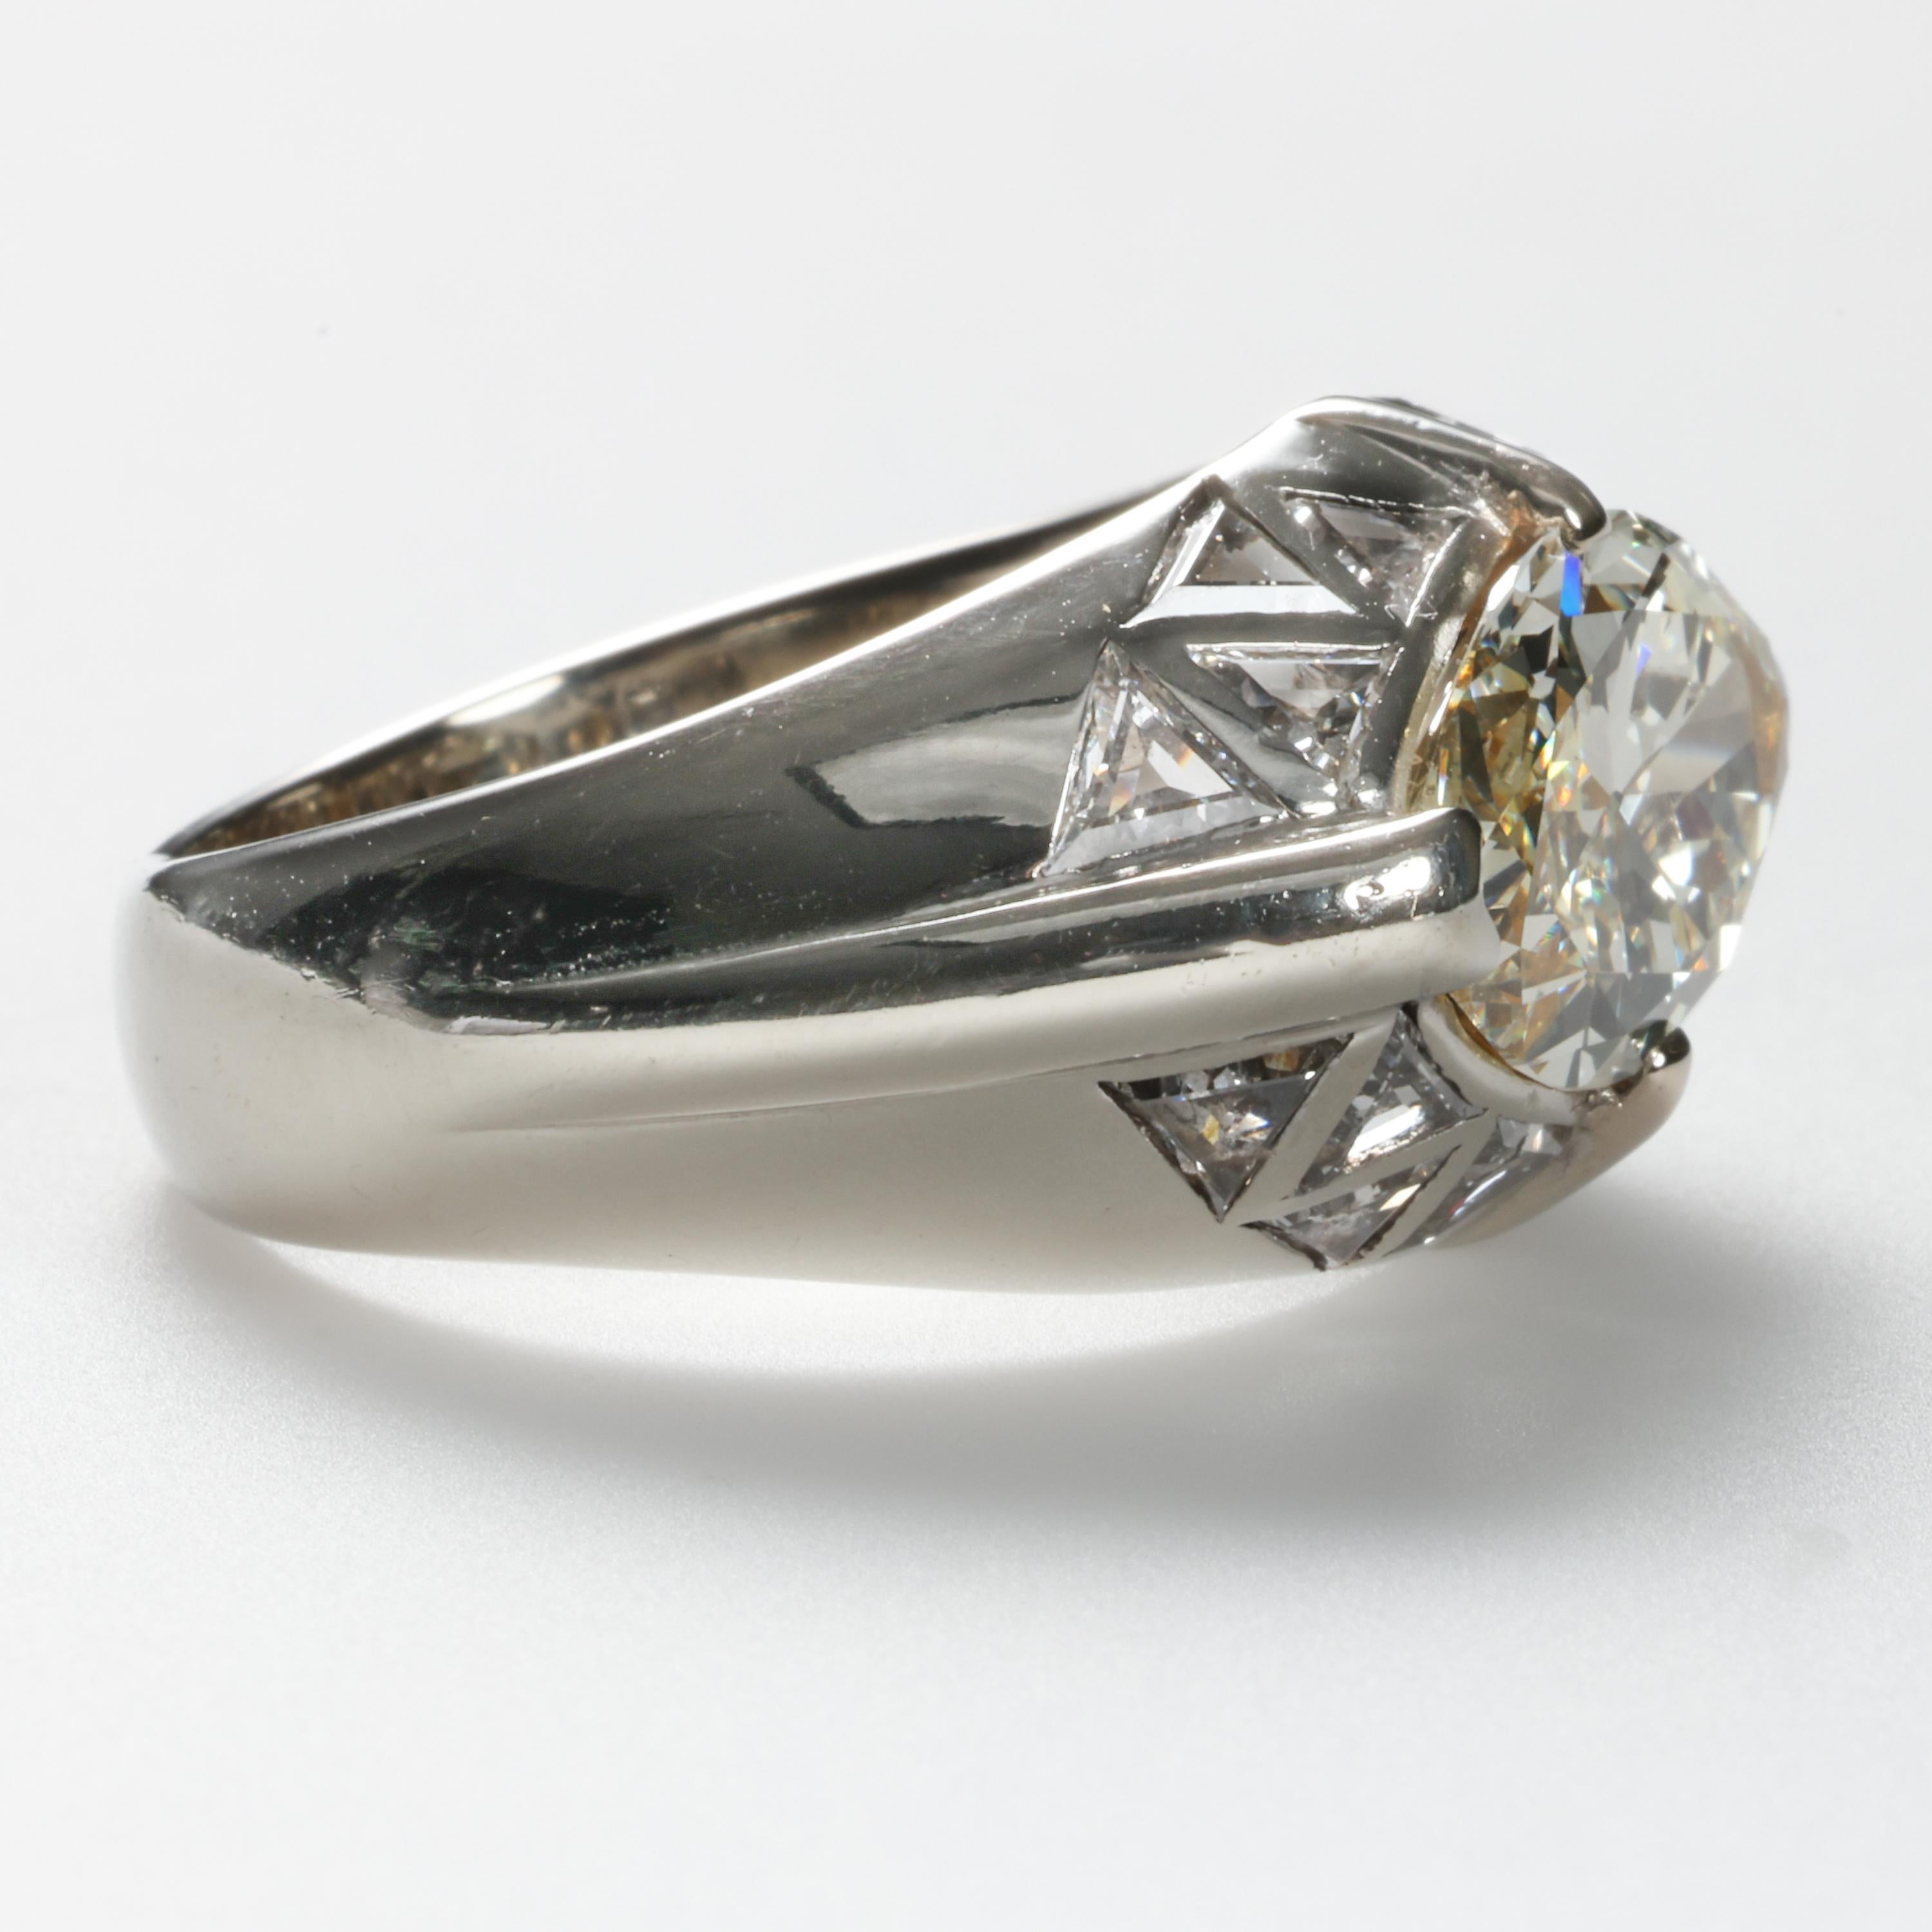 4.75 carat diamond